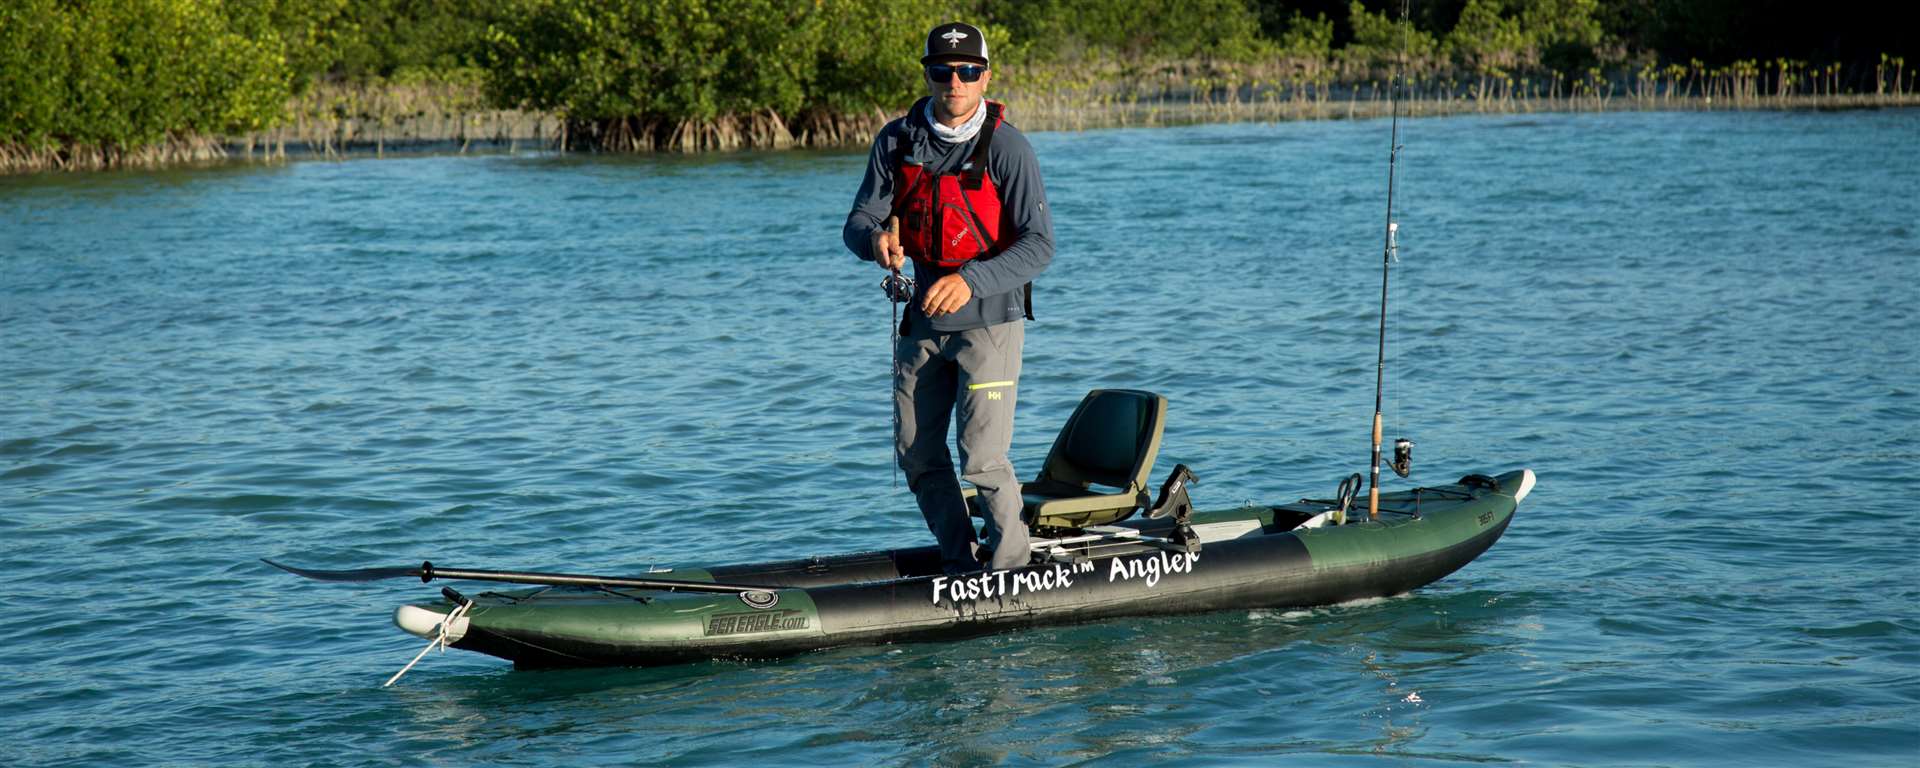 Sea Eagle 385fta FastTrack™ Angler iK Rigged For Fishing 